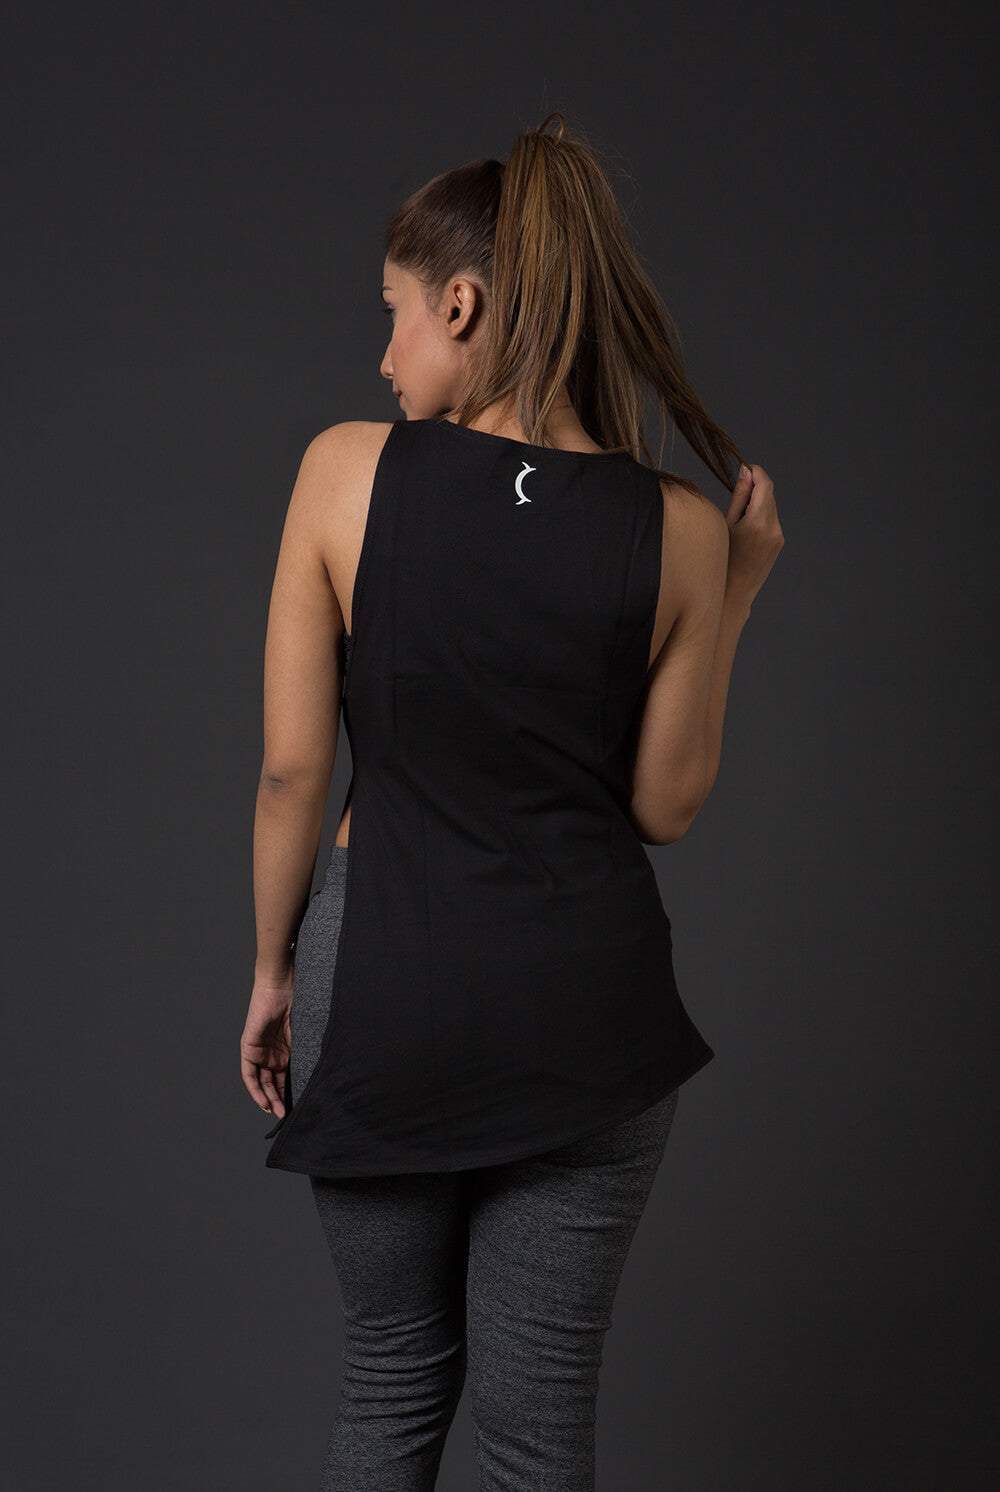 Miring Women Vest - Black-Bodybrics-Women's Vest